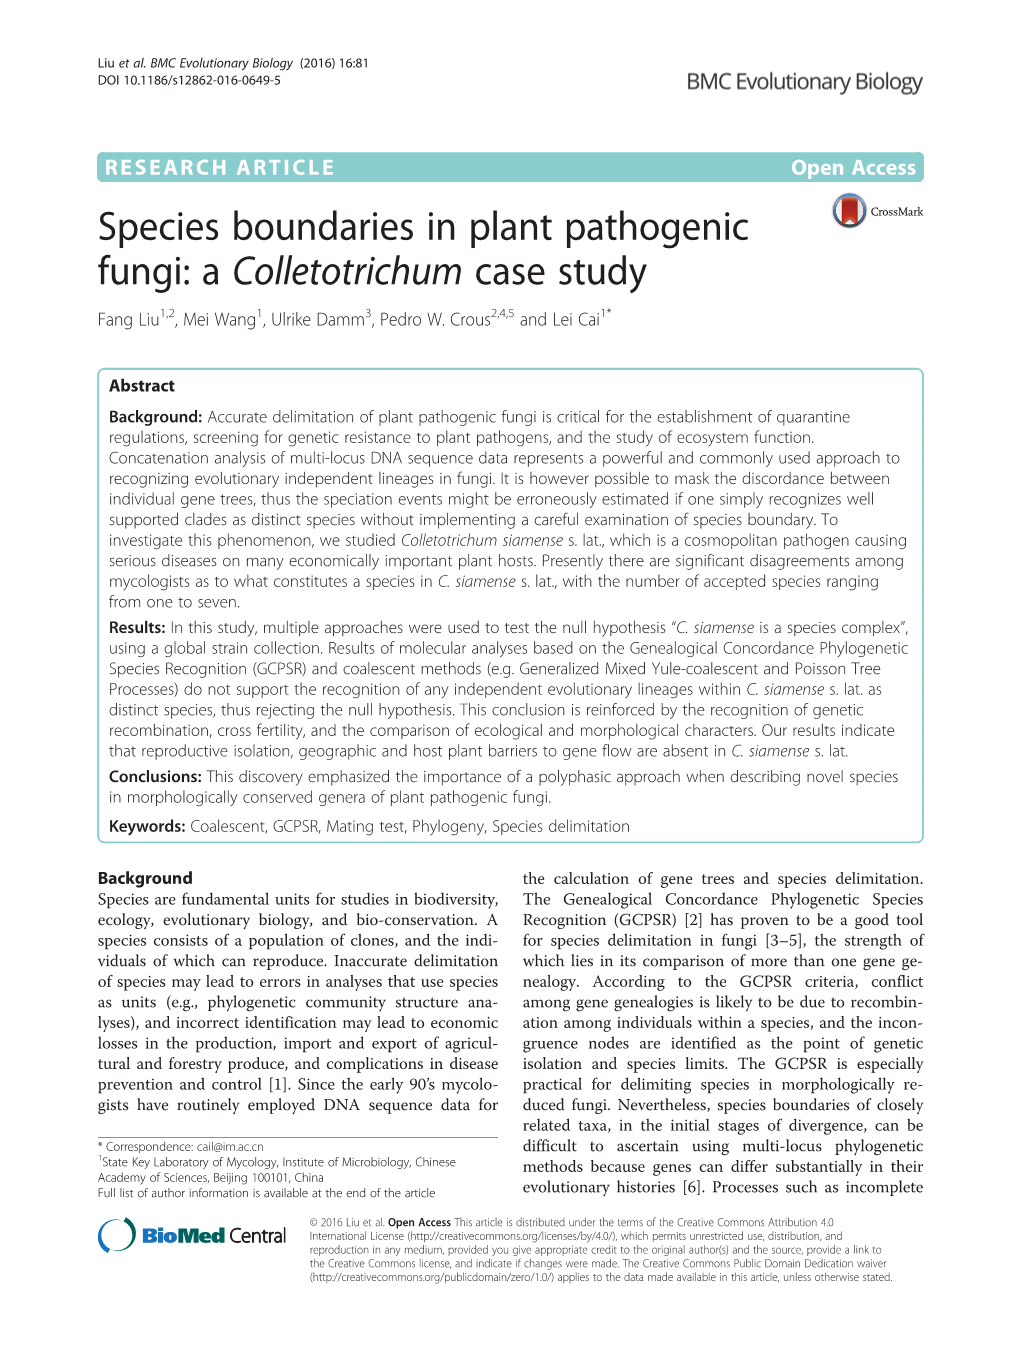 Species Boundaries in Plant Pathogenic Fungi: a Colletotrichum Case Study Fang Liu1,2, Mei Wang1, Ulrike Damm3, Pedro W